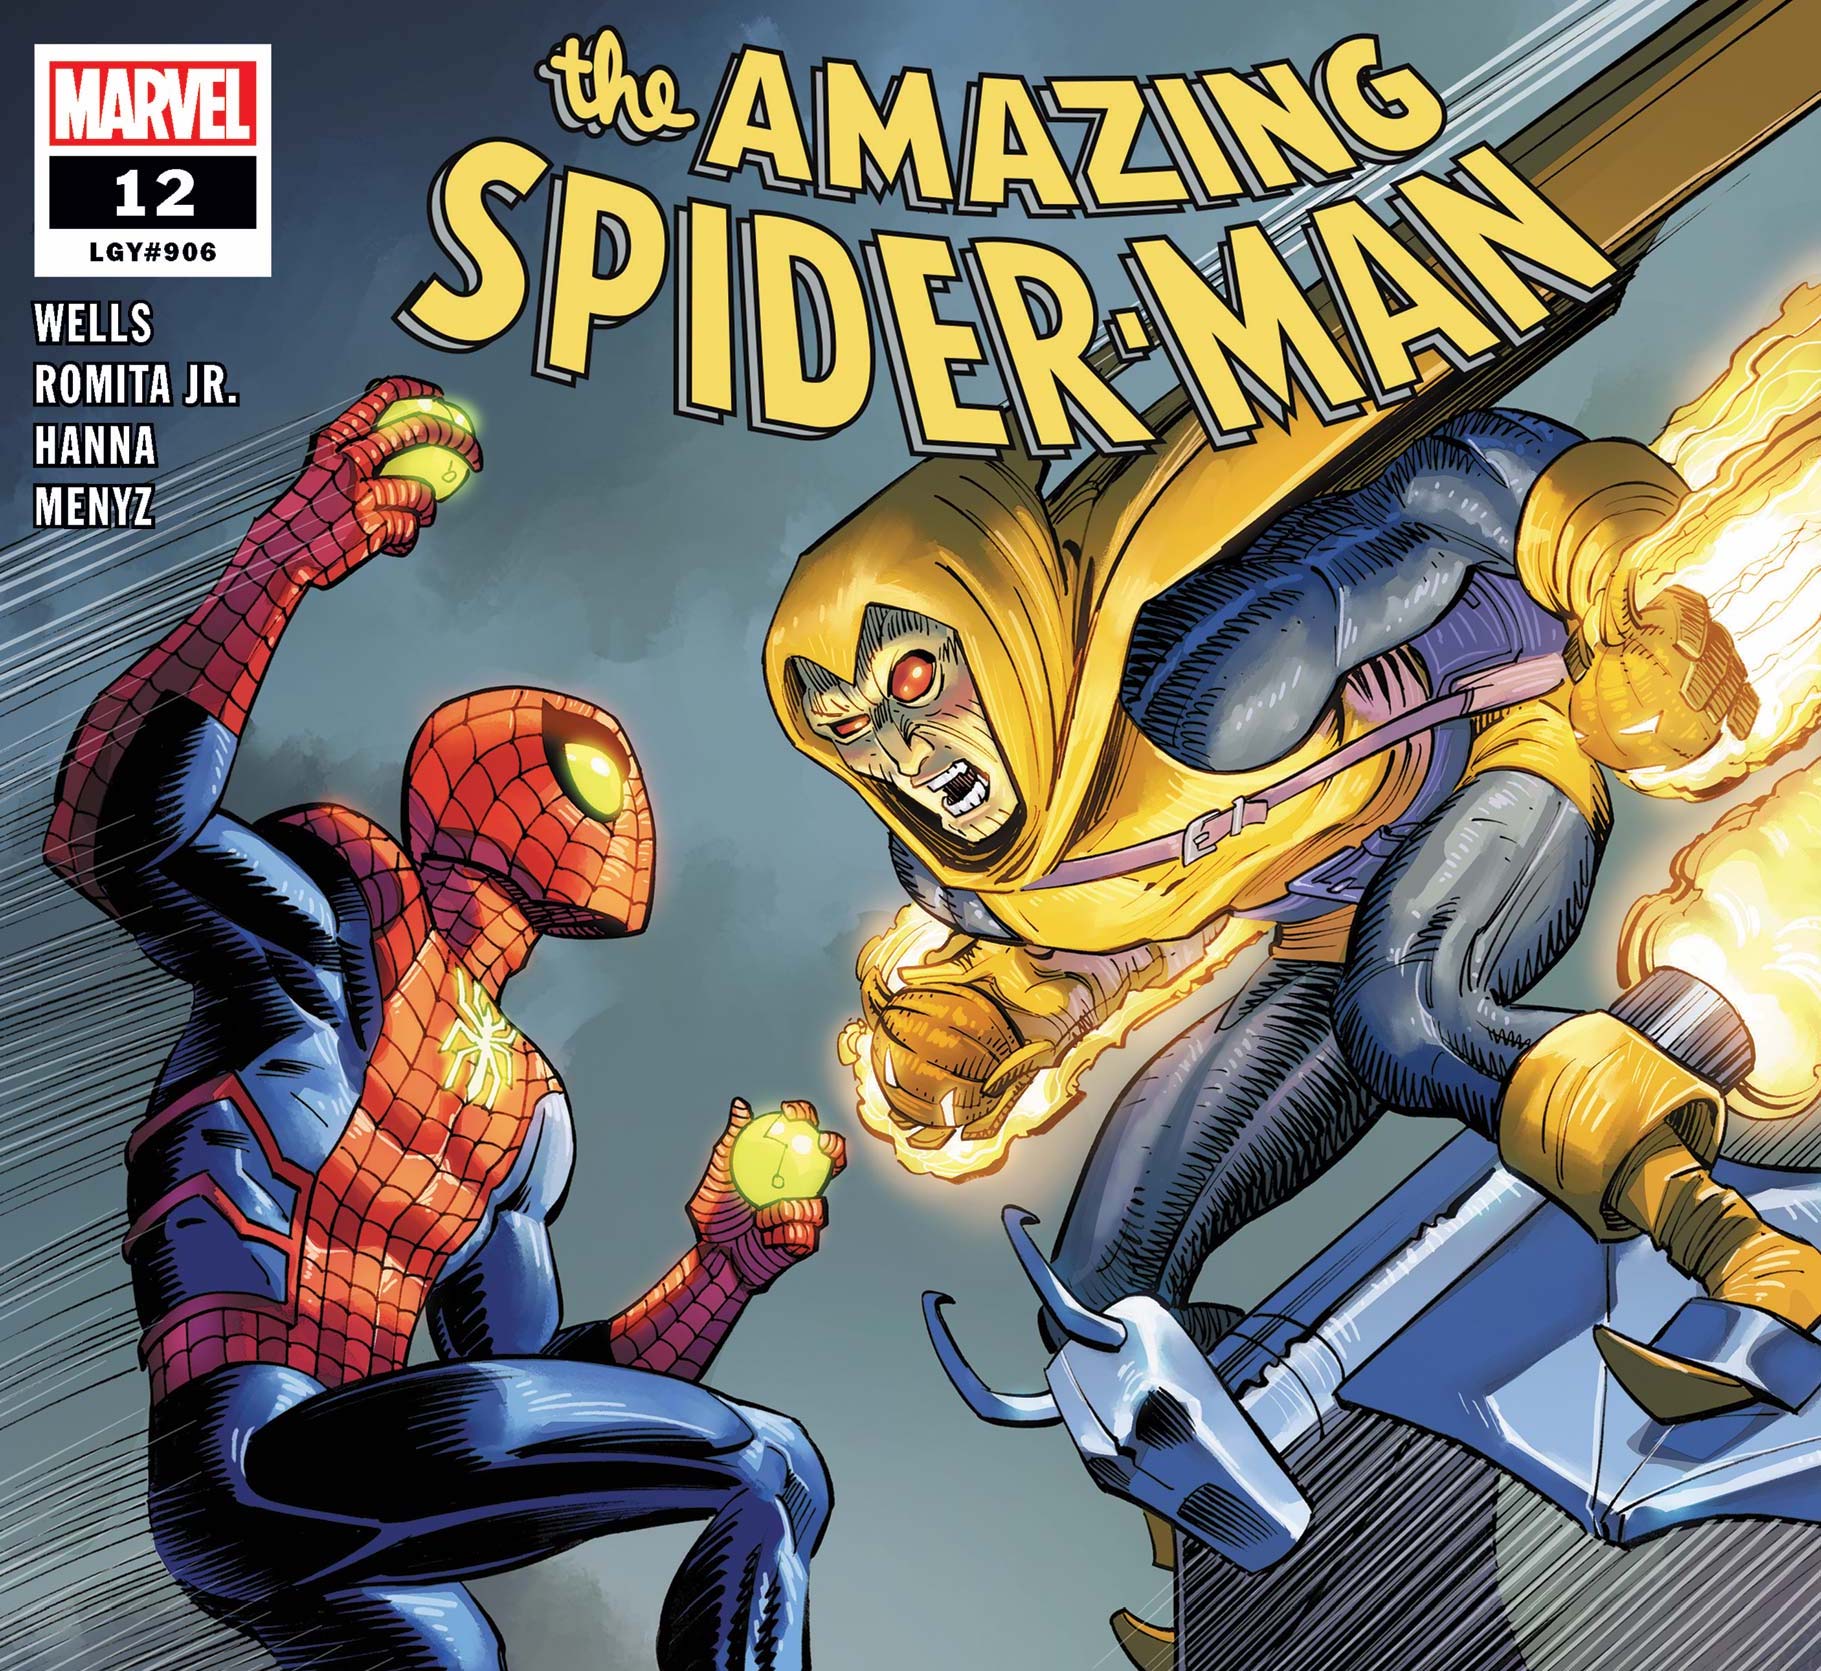 'Amazing Spider-Man' #12 is a great Hobgoblin showdown